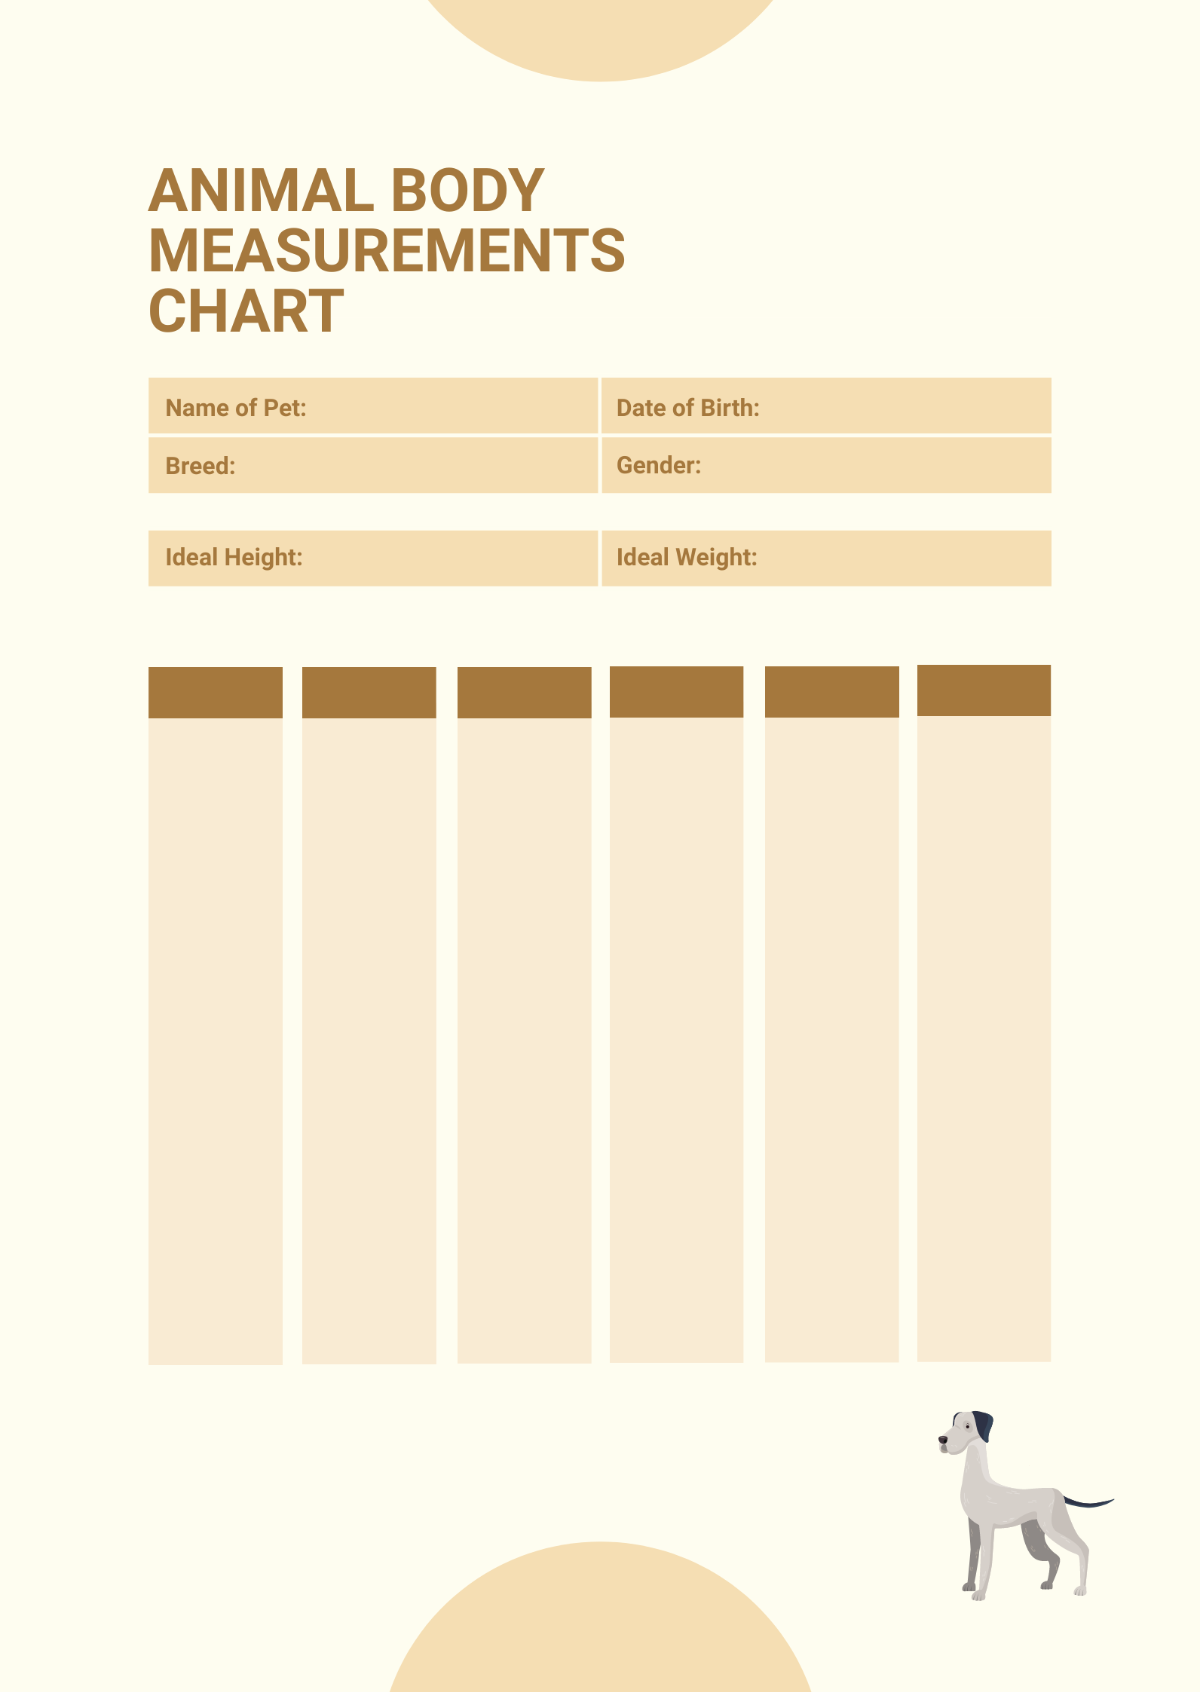 Animal Body Measurements Chart Template